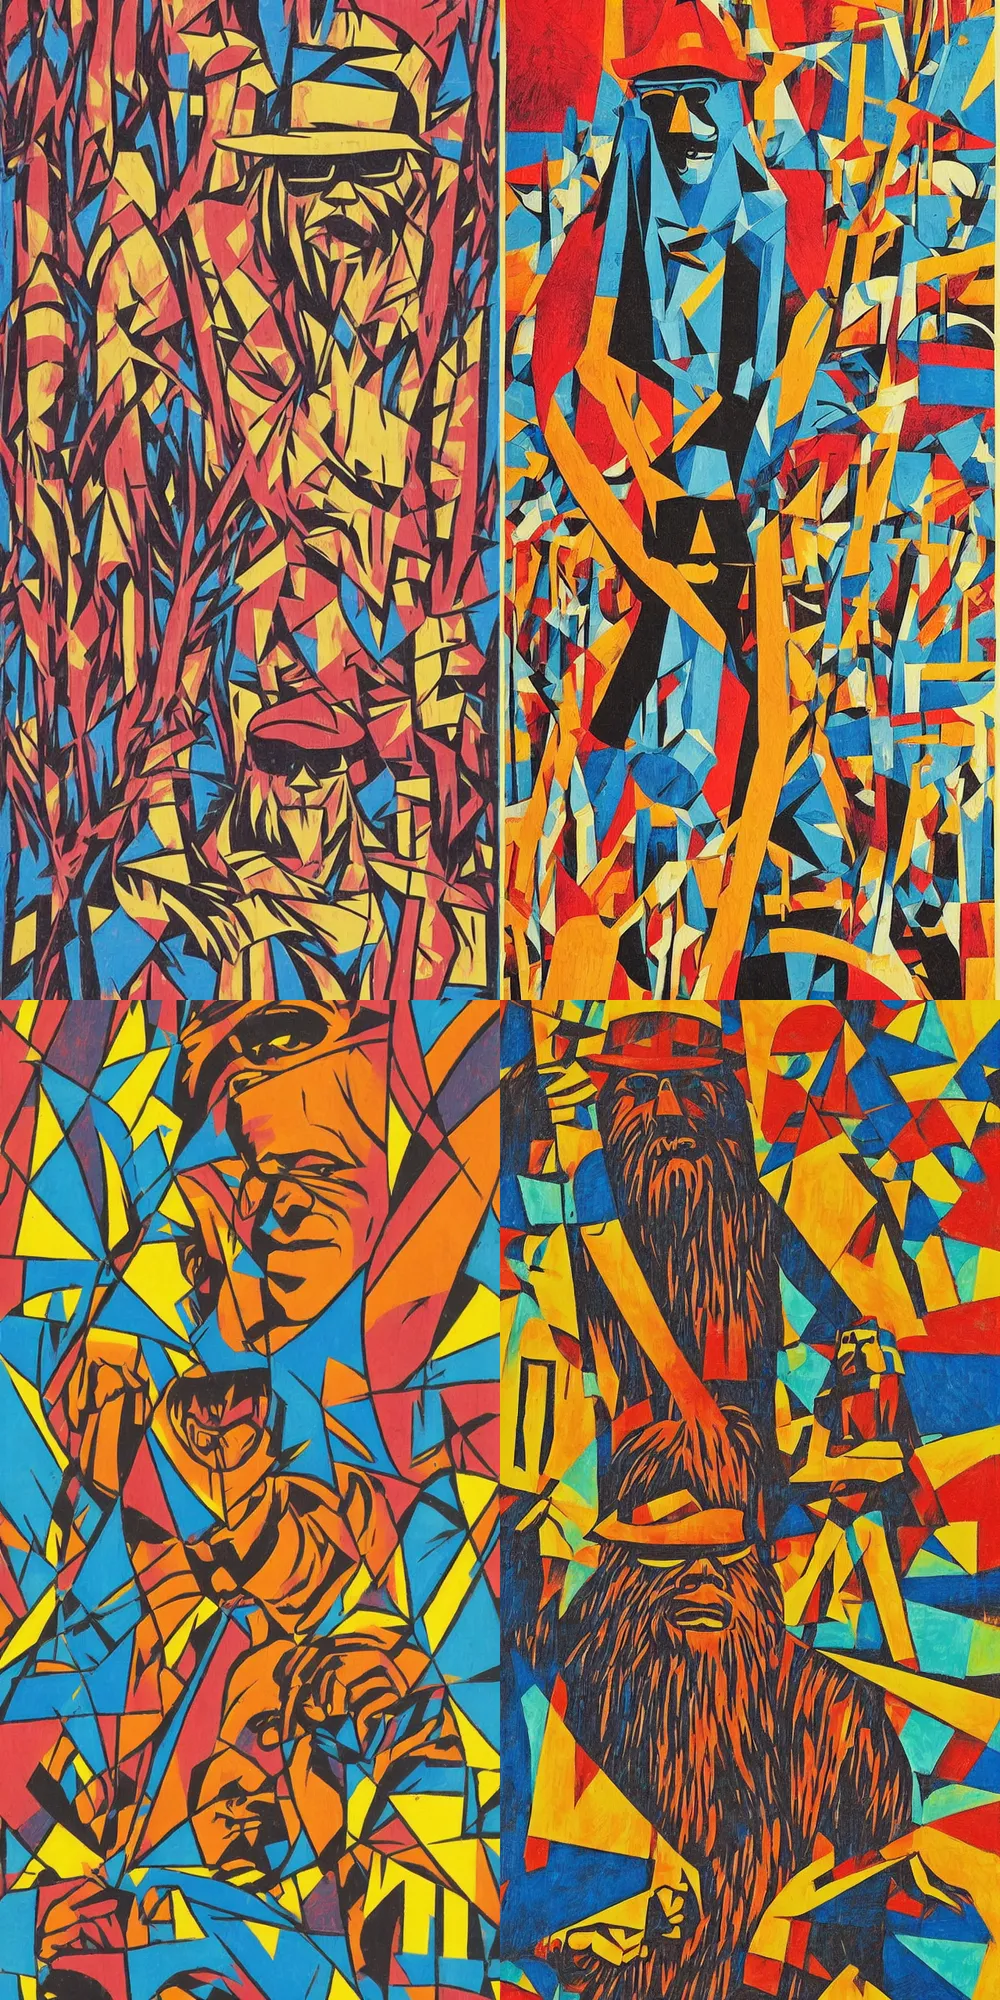 Prompt: woodcut print, sasquatch, bigfoot, male model wearing sunglasses, wearing flatbill hat, shepard fairey artwork, trees, colorful, cubism poster art in the style of georgy kurasov